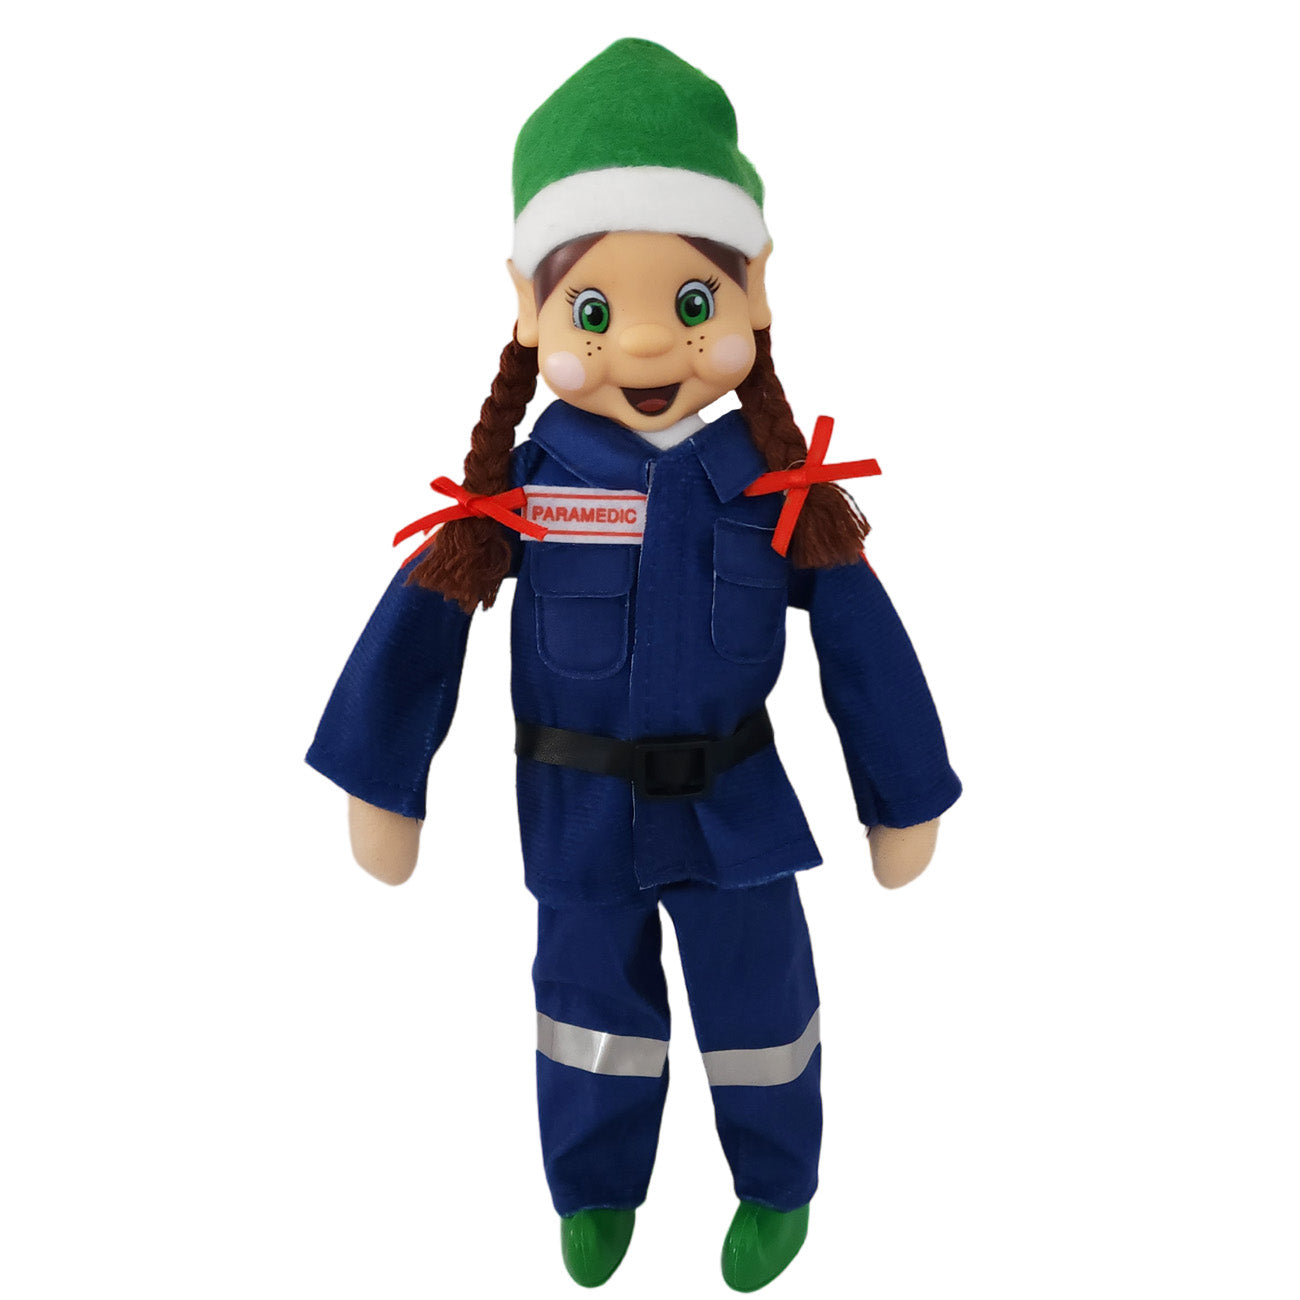 Elf wearing a paramedic costume